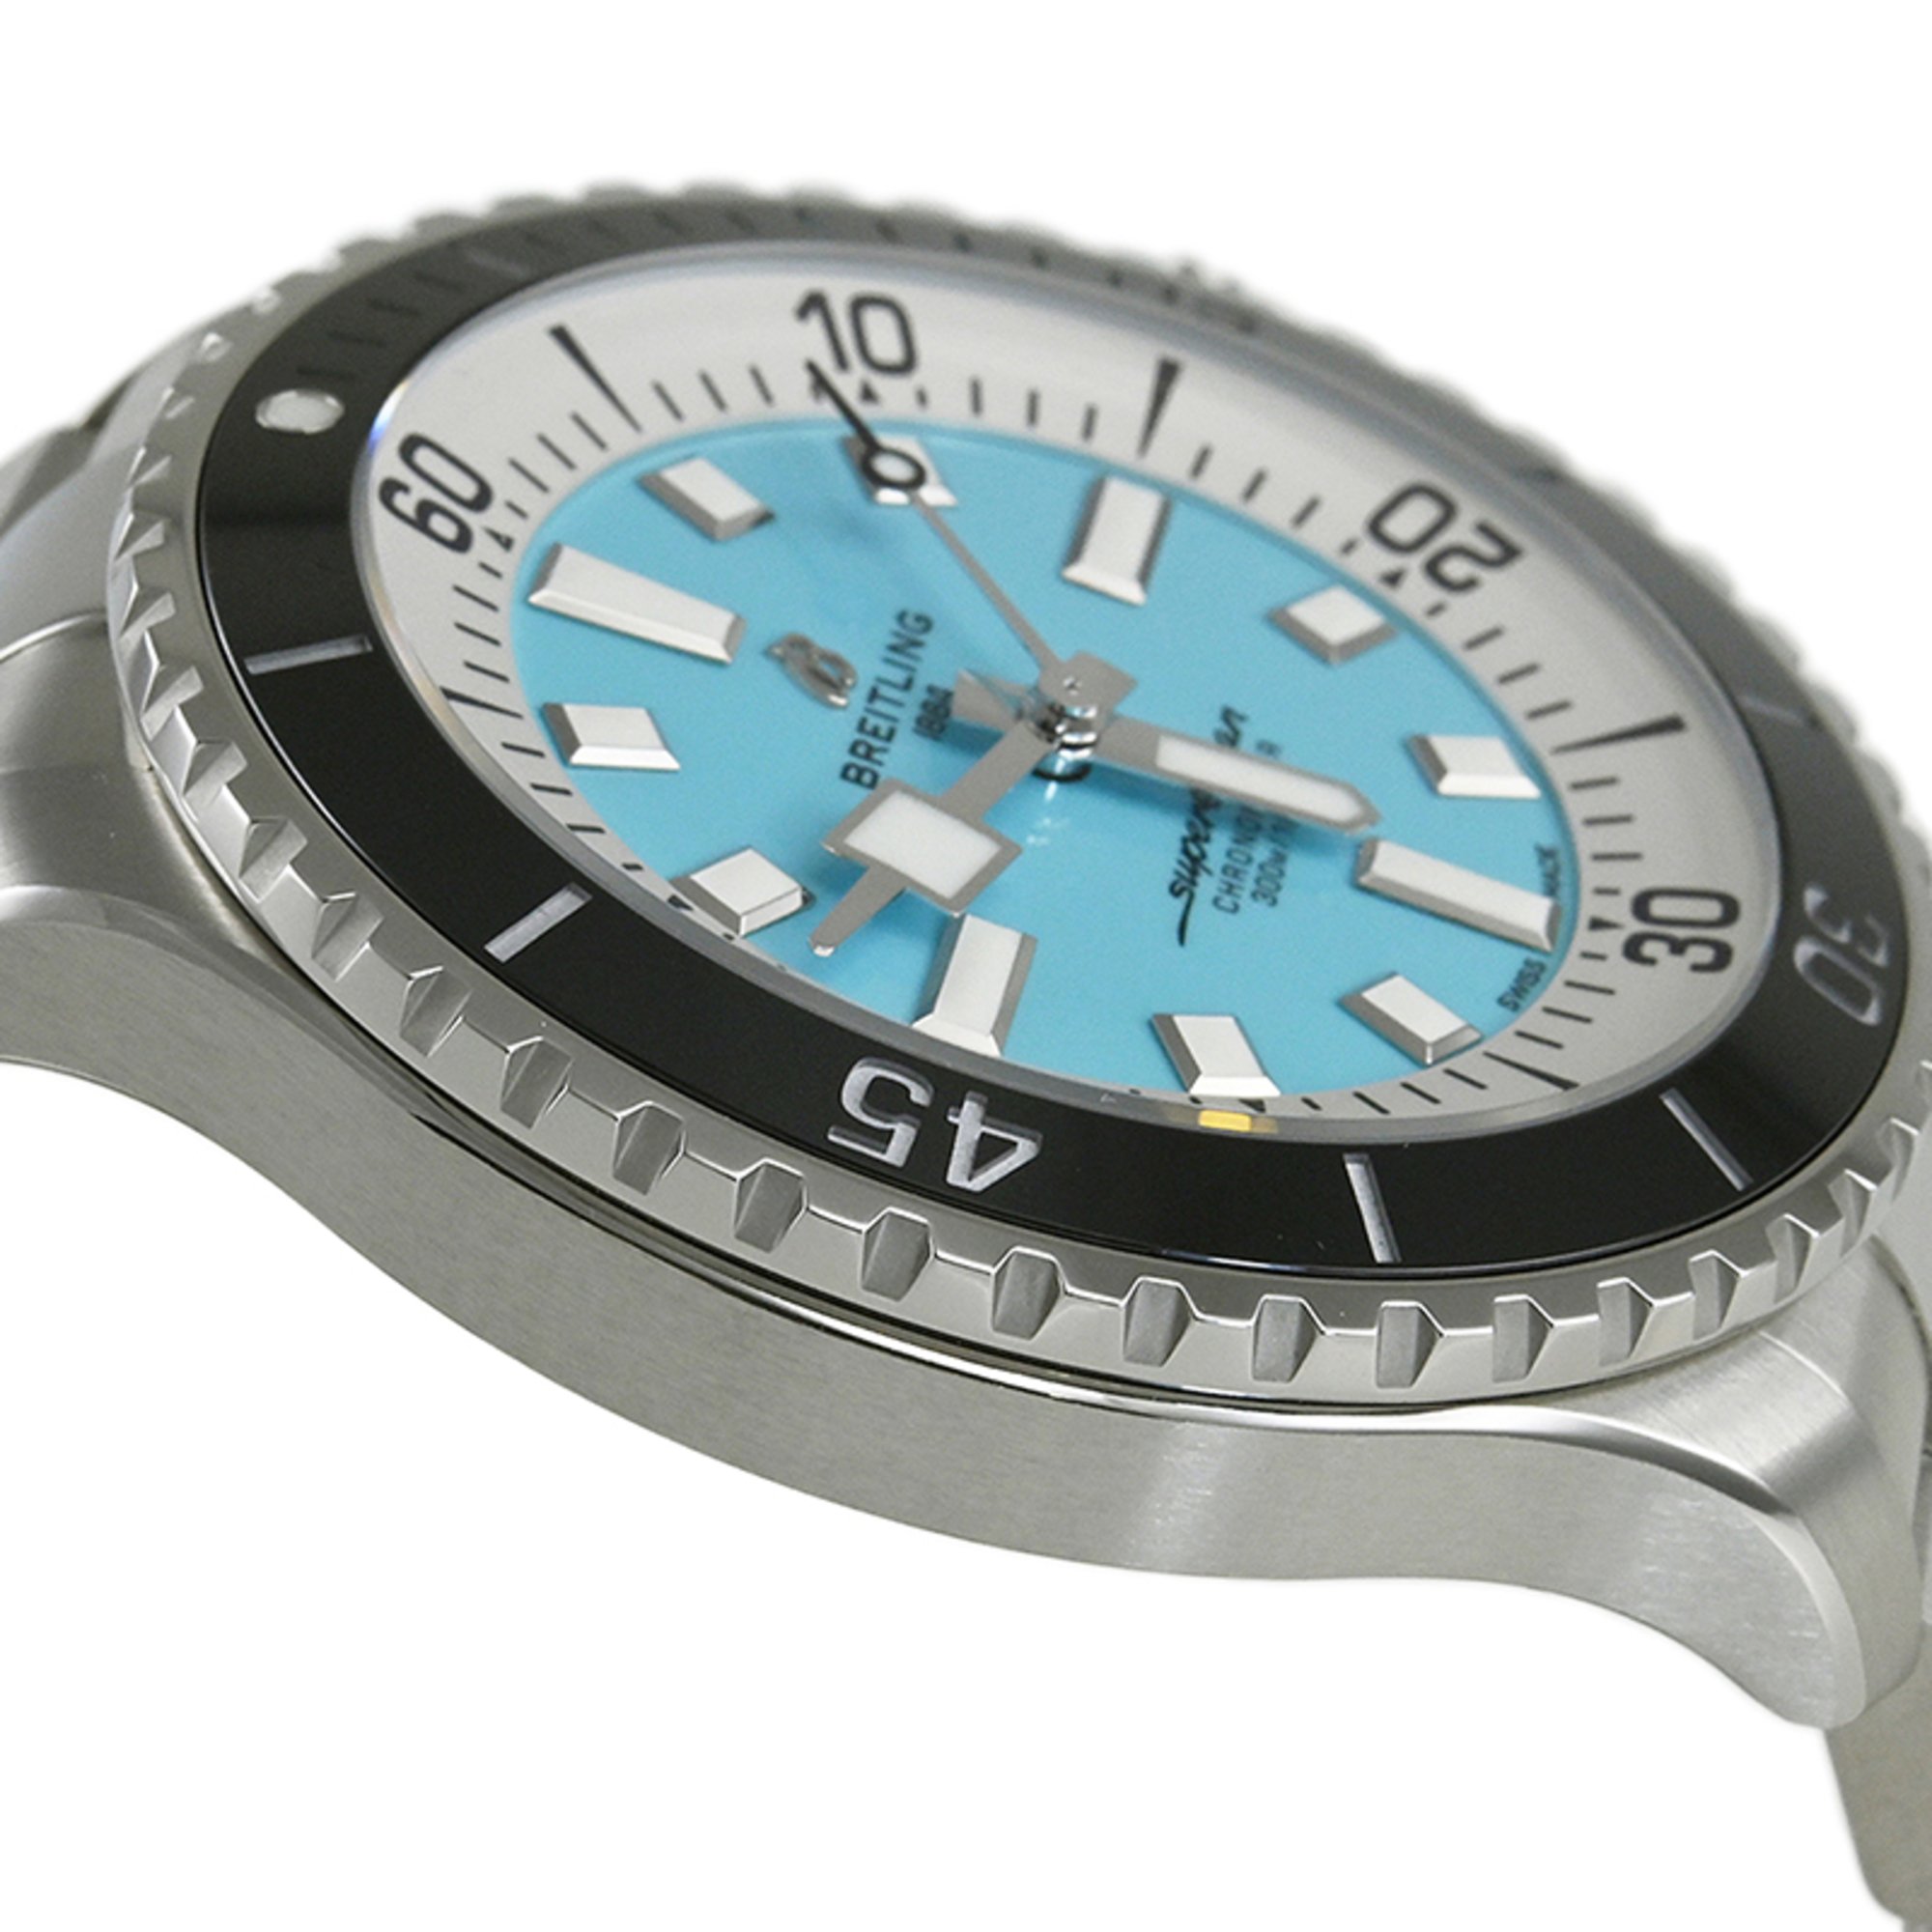 BREITLING Super Ocean Automatic 44 Watch A17376211L2A1(A17376)